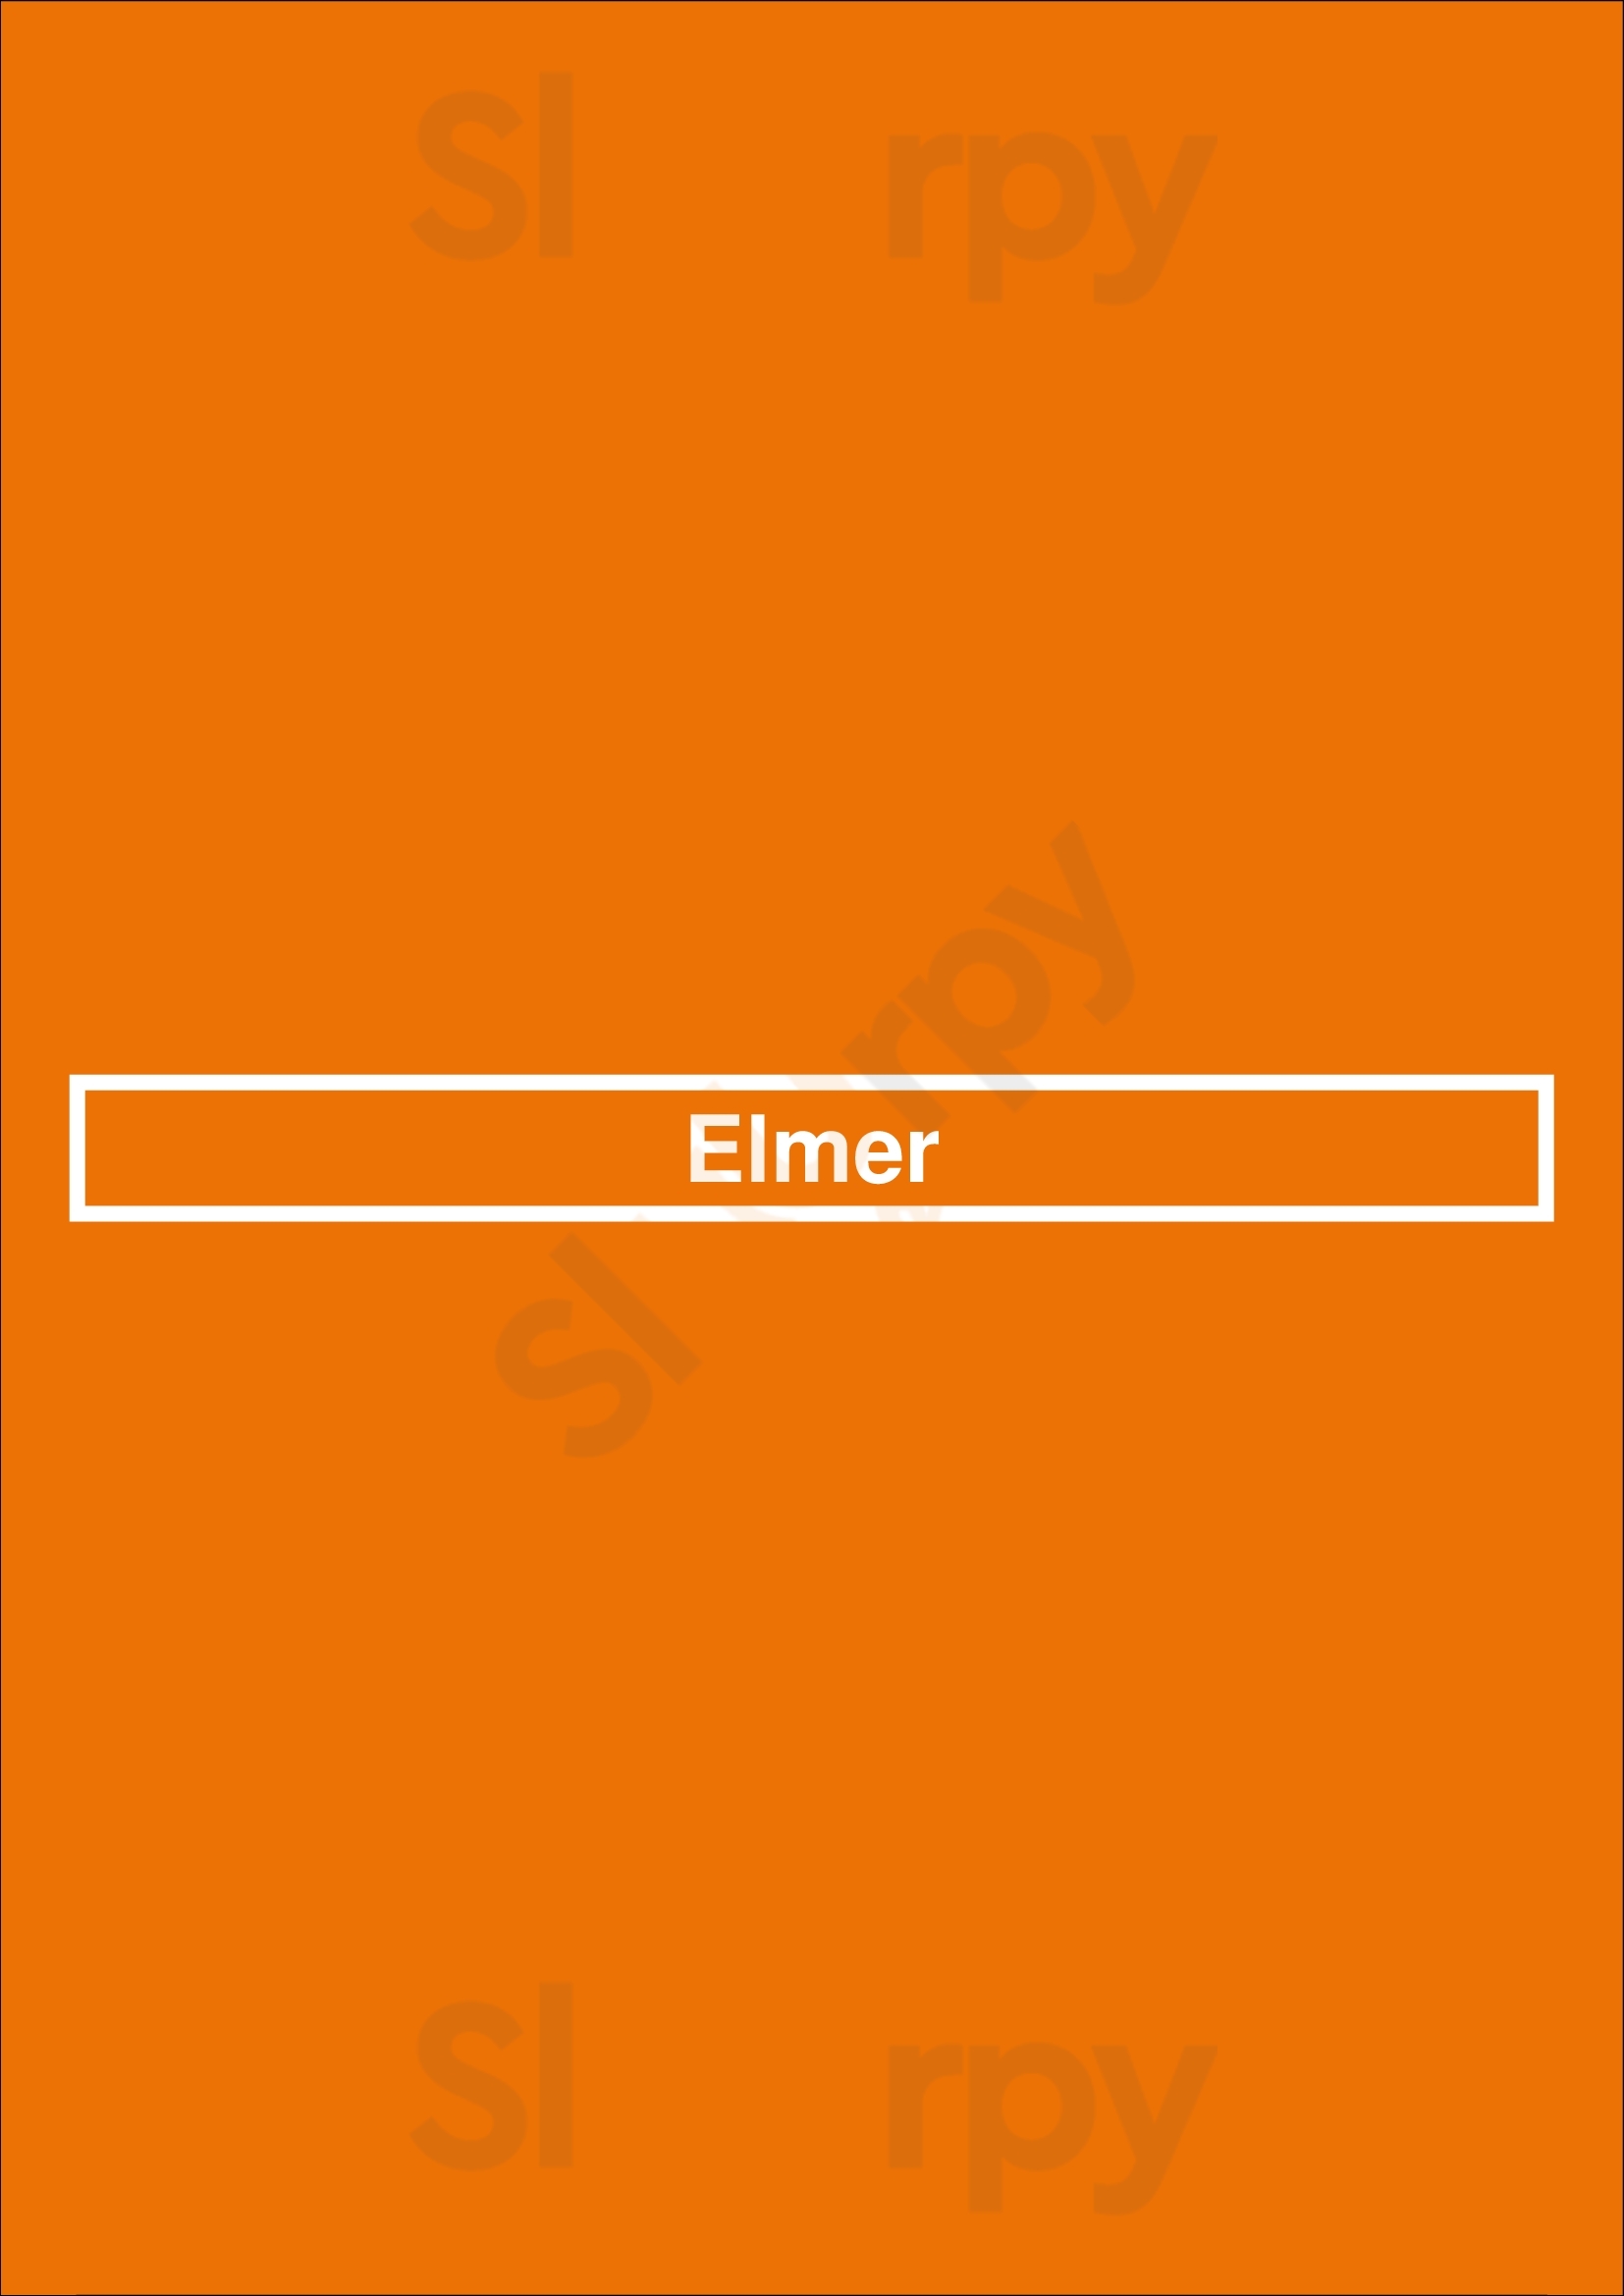 Elmer Paris Menu - 1